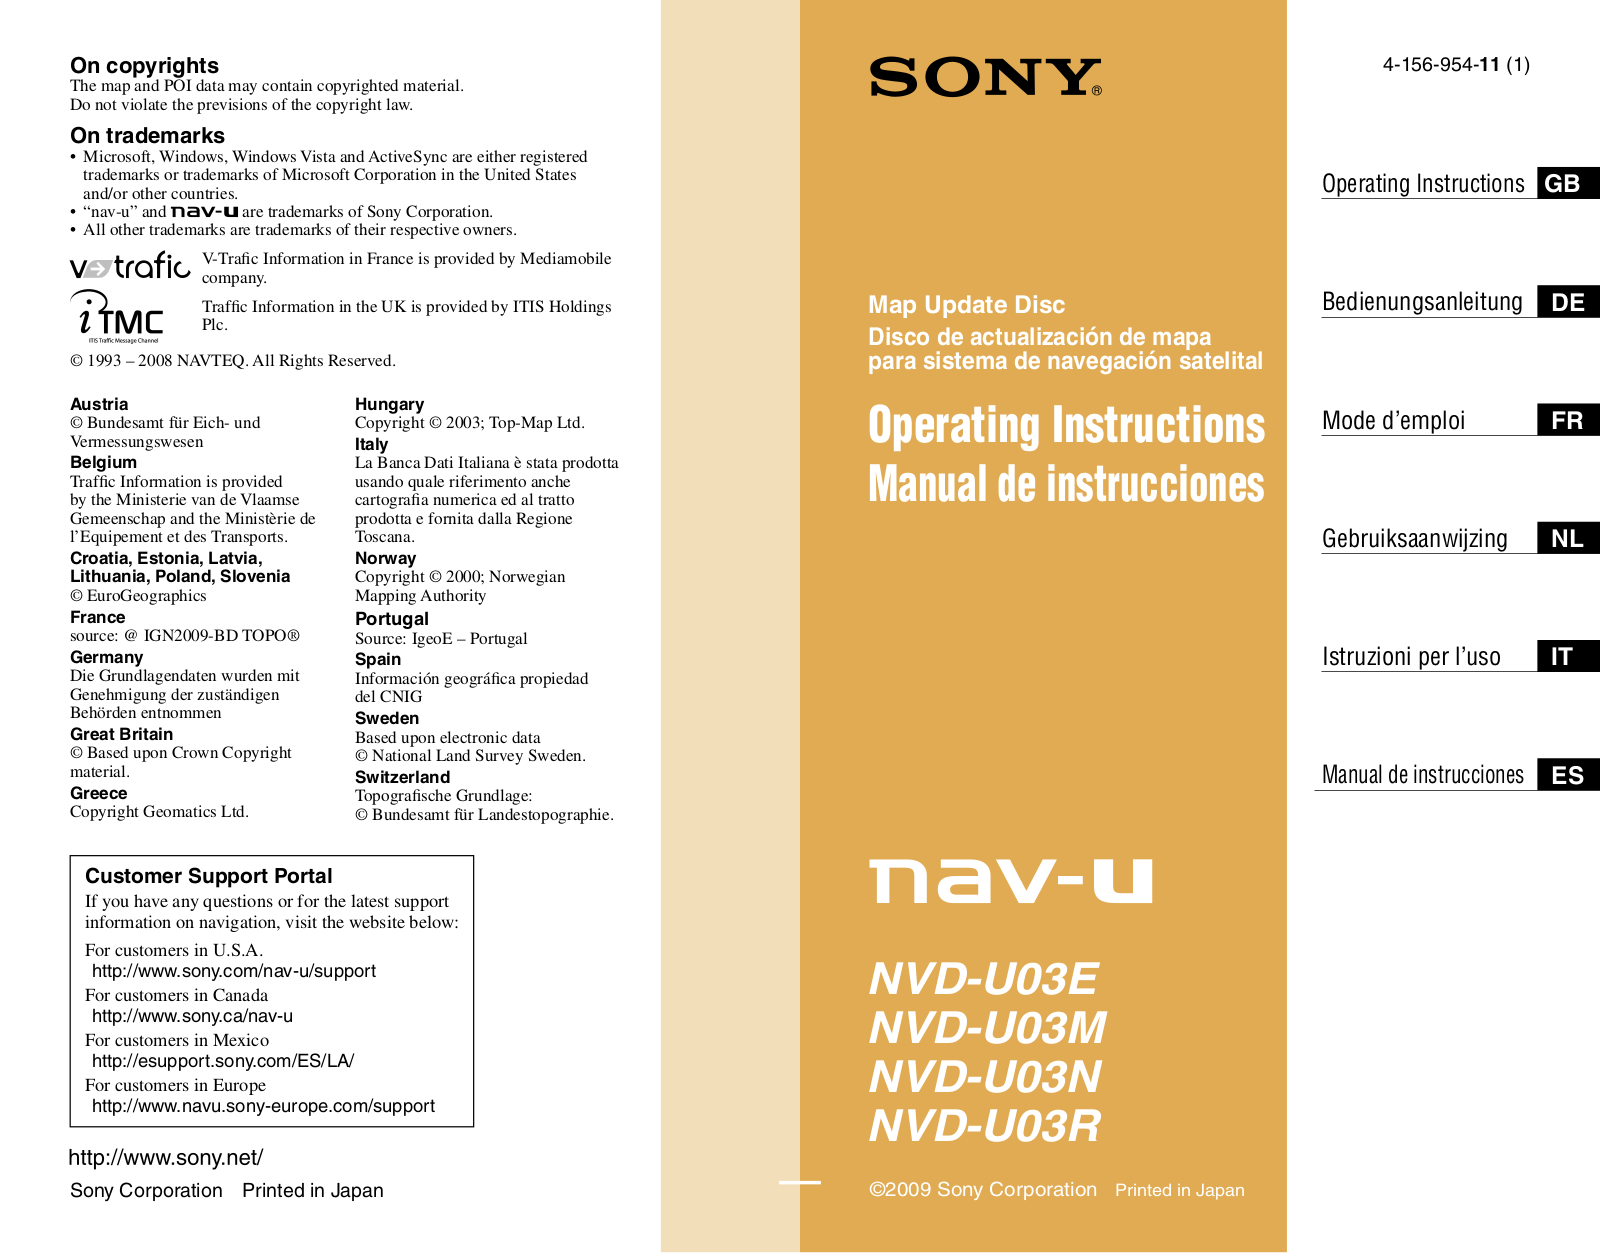 SONY NVD-U03M, NVD-U03N, NVD-U03R User Manual